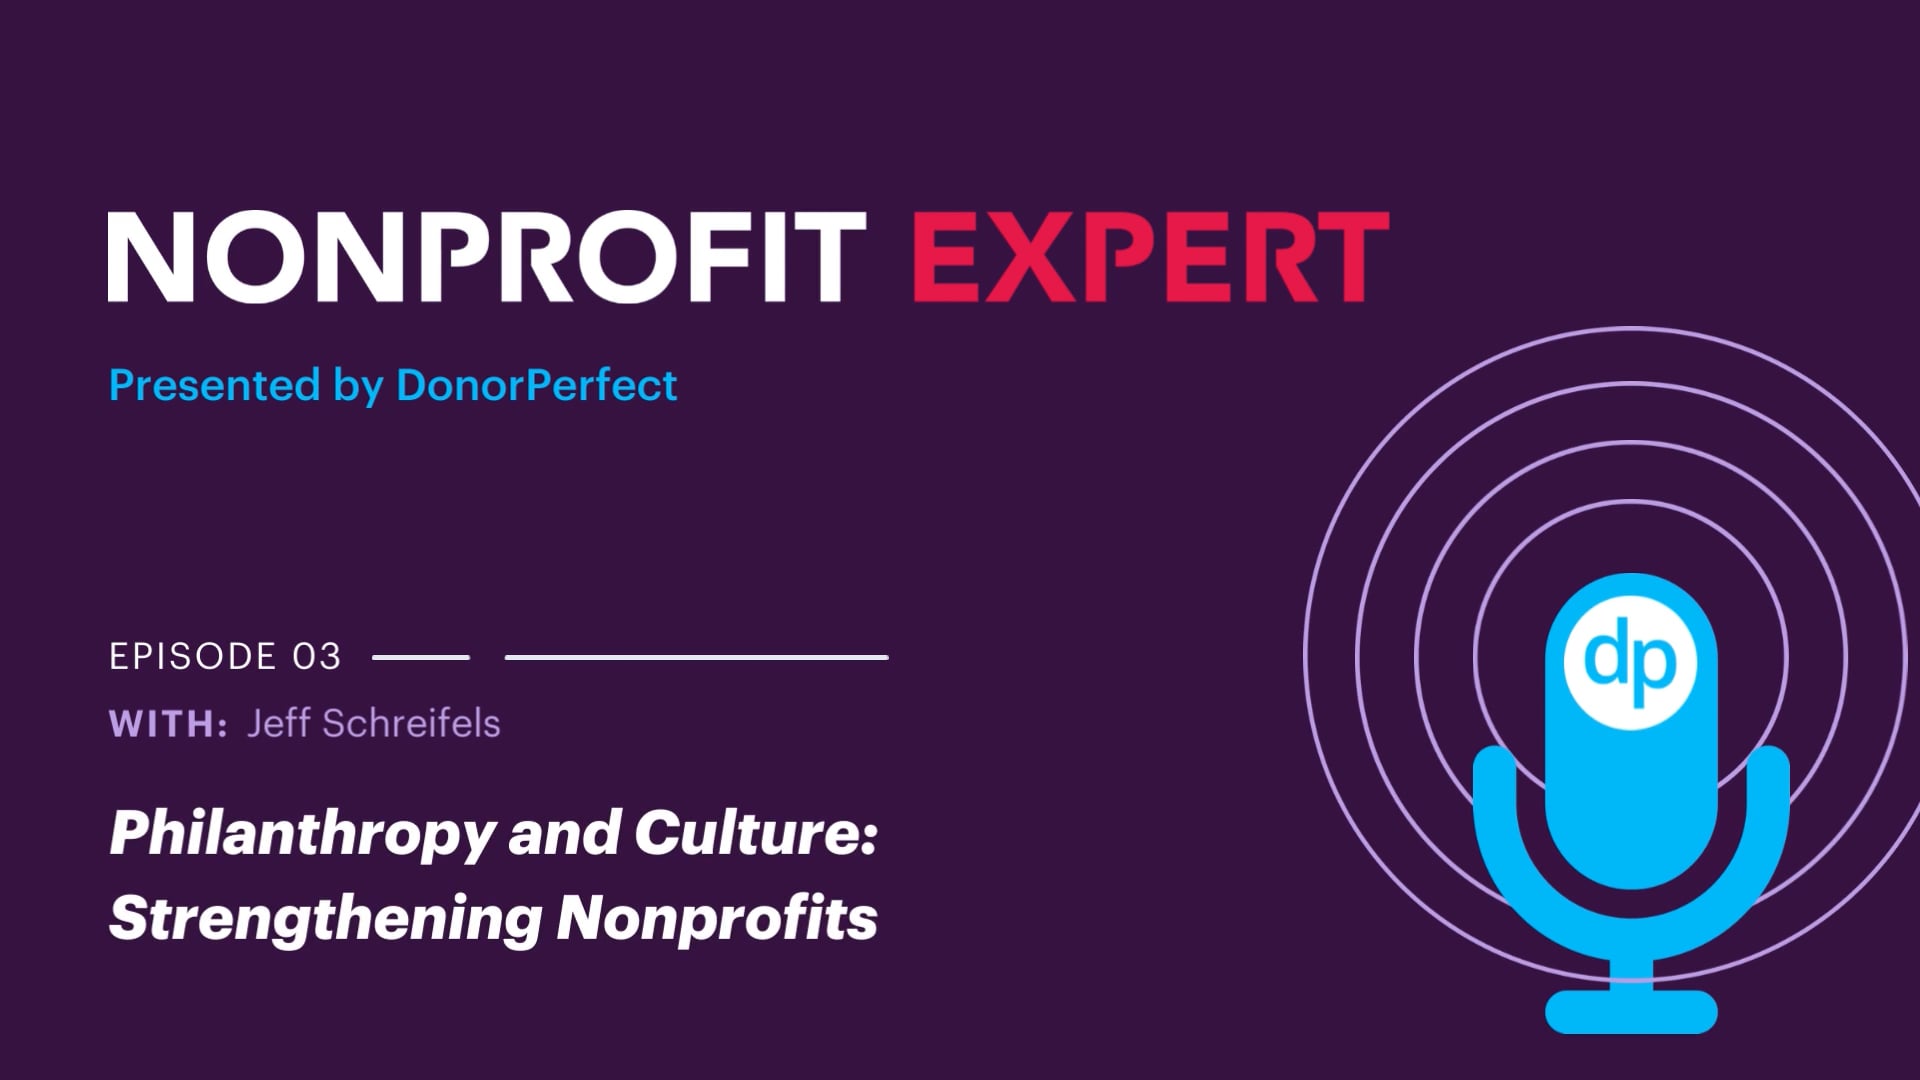 Nonprofit Expert Episode 3 - Philanthropy and Culture: Strengthening Nonprofits with Jeff Schreifels